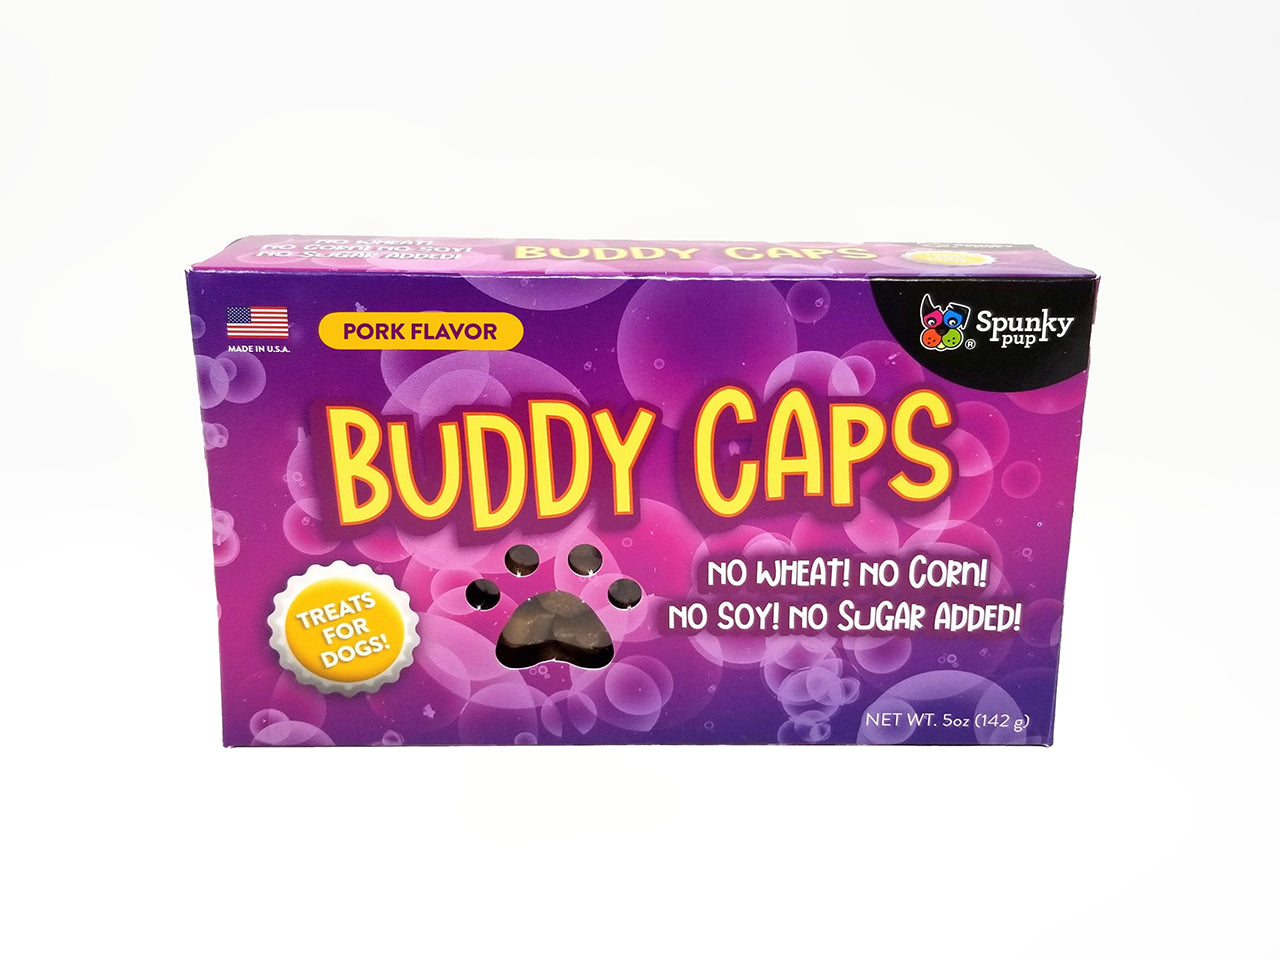 BUDDY CAPS